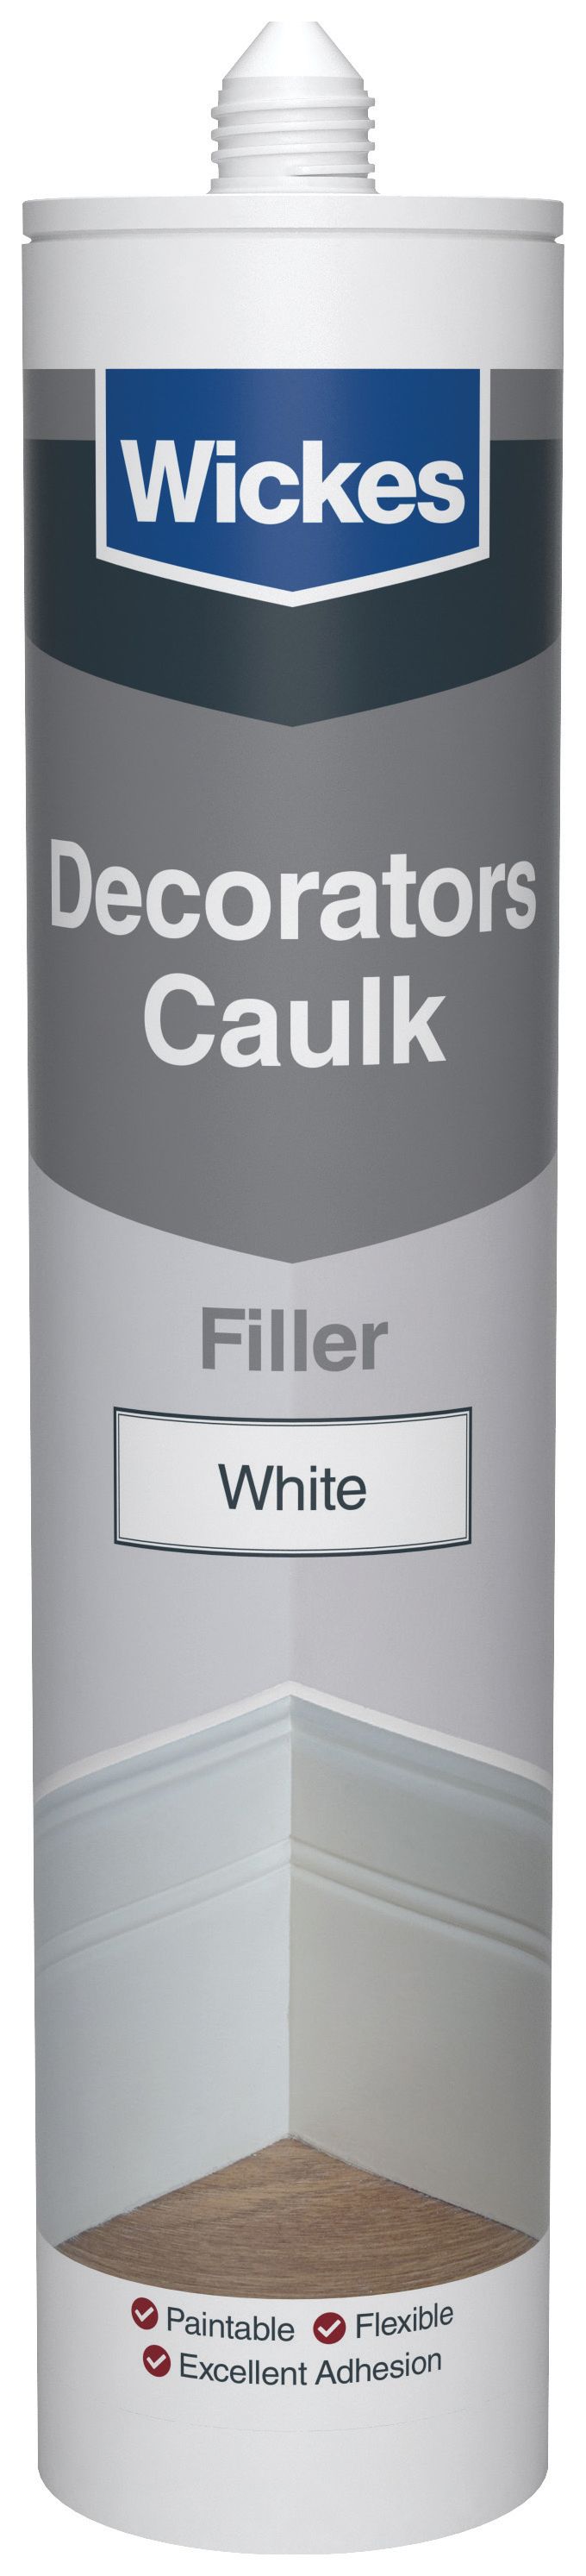 Image of Wickes Decorators Caulk White - 300ml